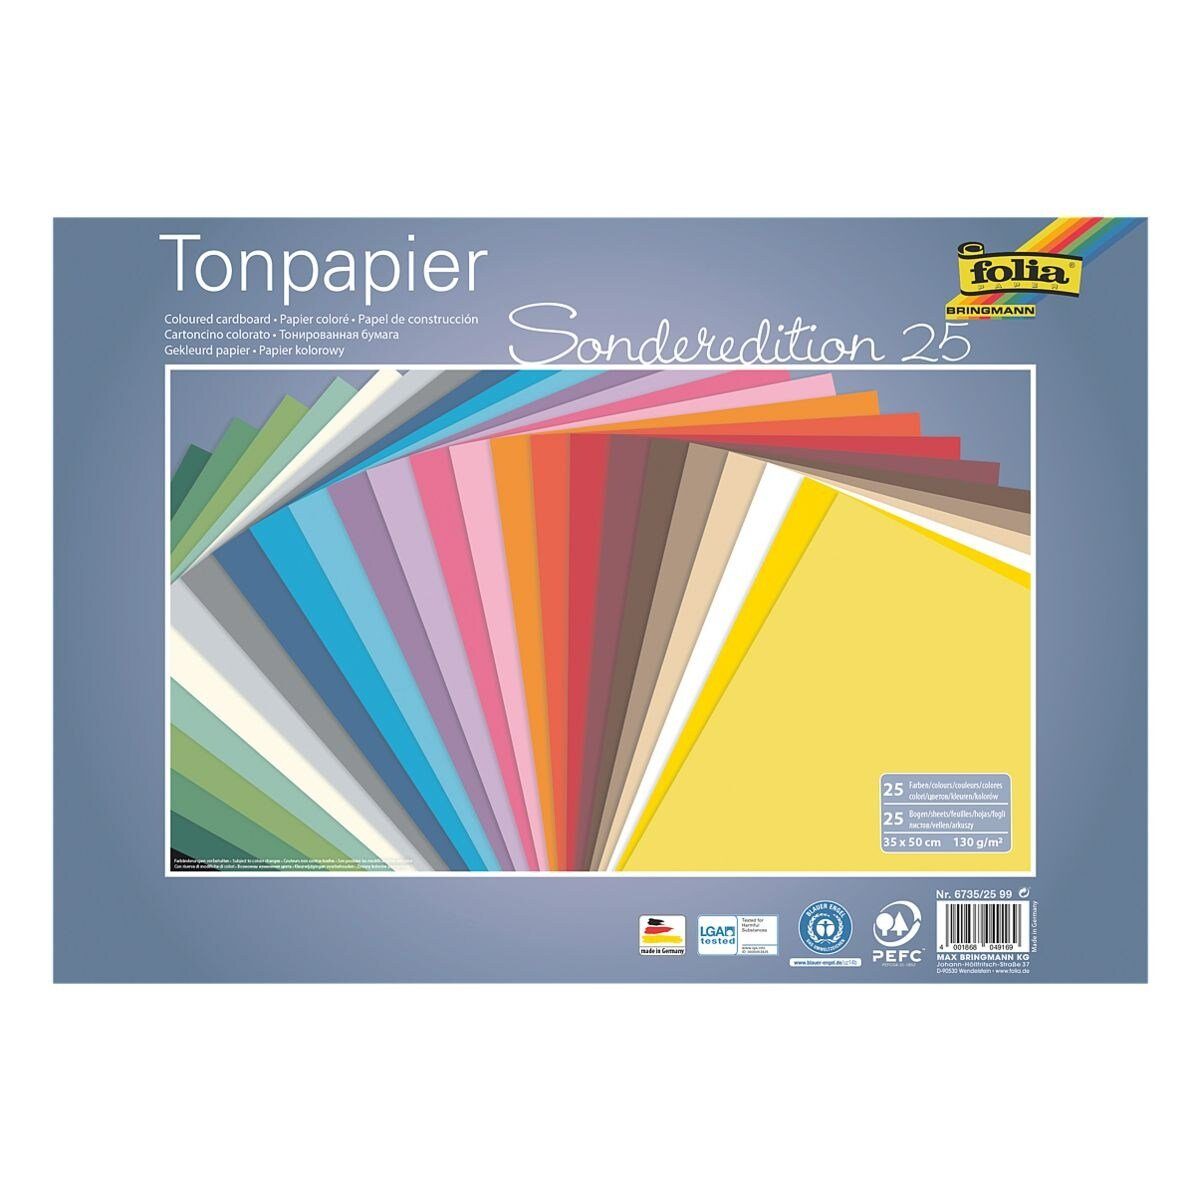 25 Folia cm, Format Sonderedition in 35x50 Bastelkartonpapier 25 Farben, Tonpapier 130 Blatt 25, g/m²,